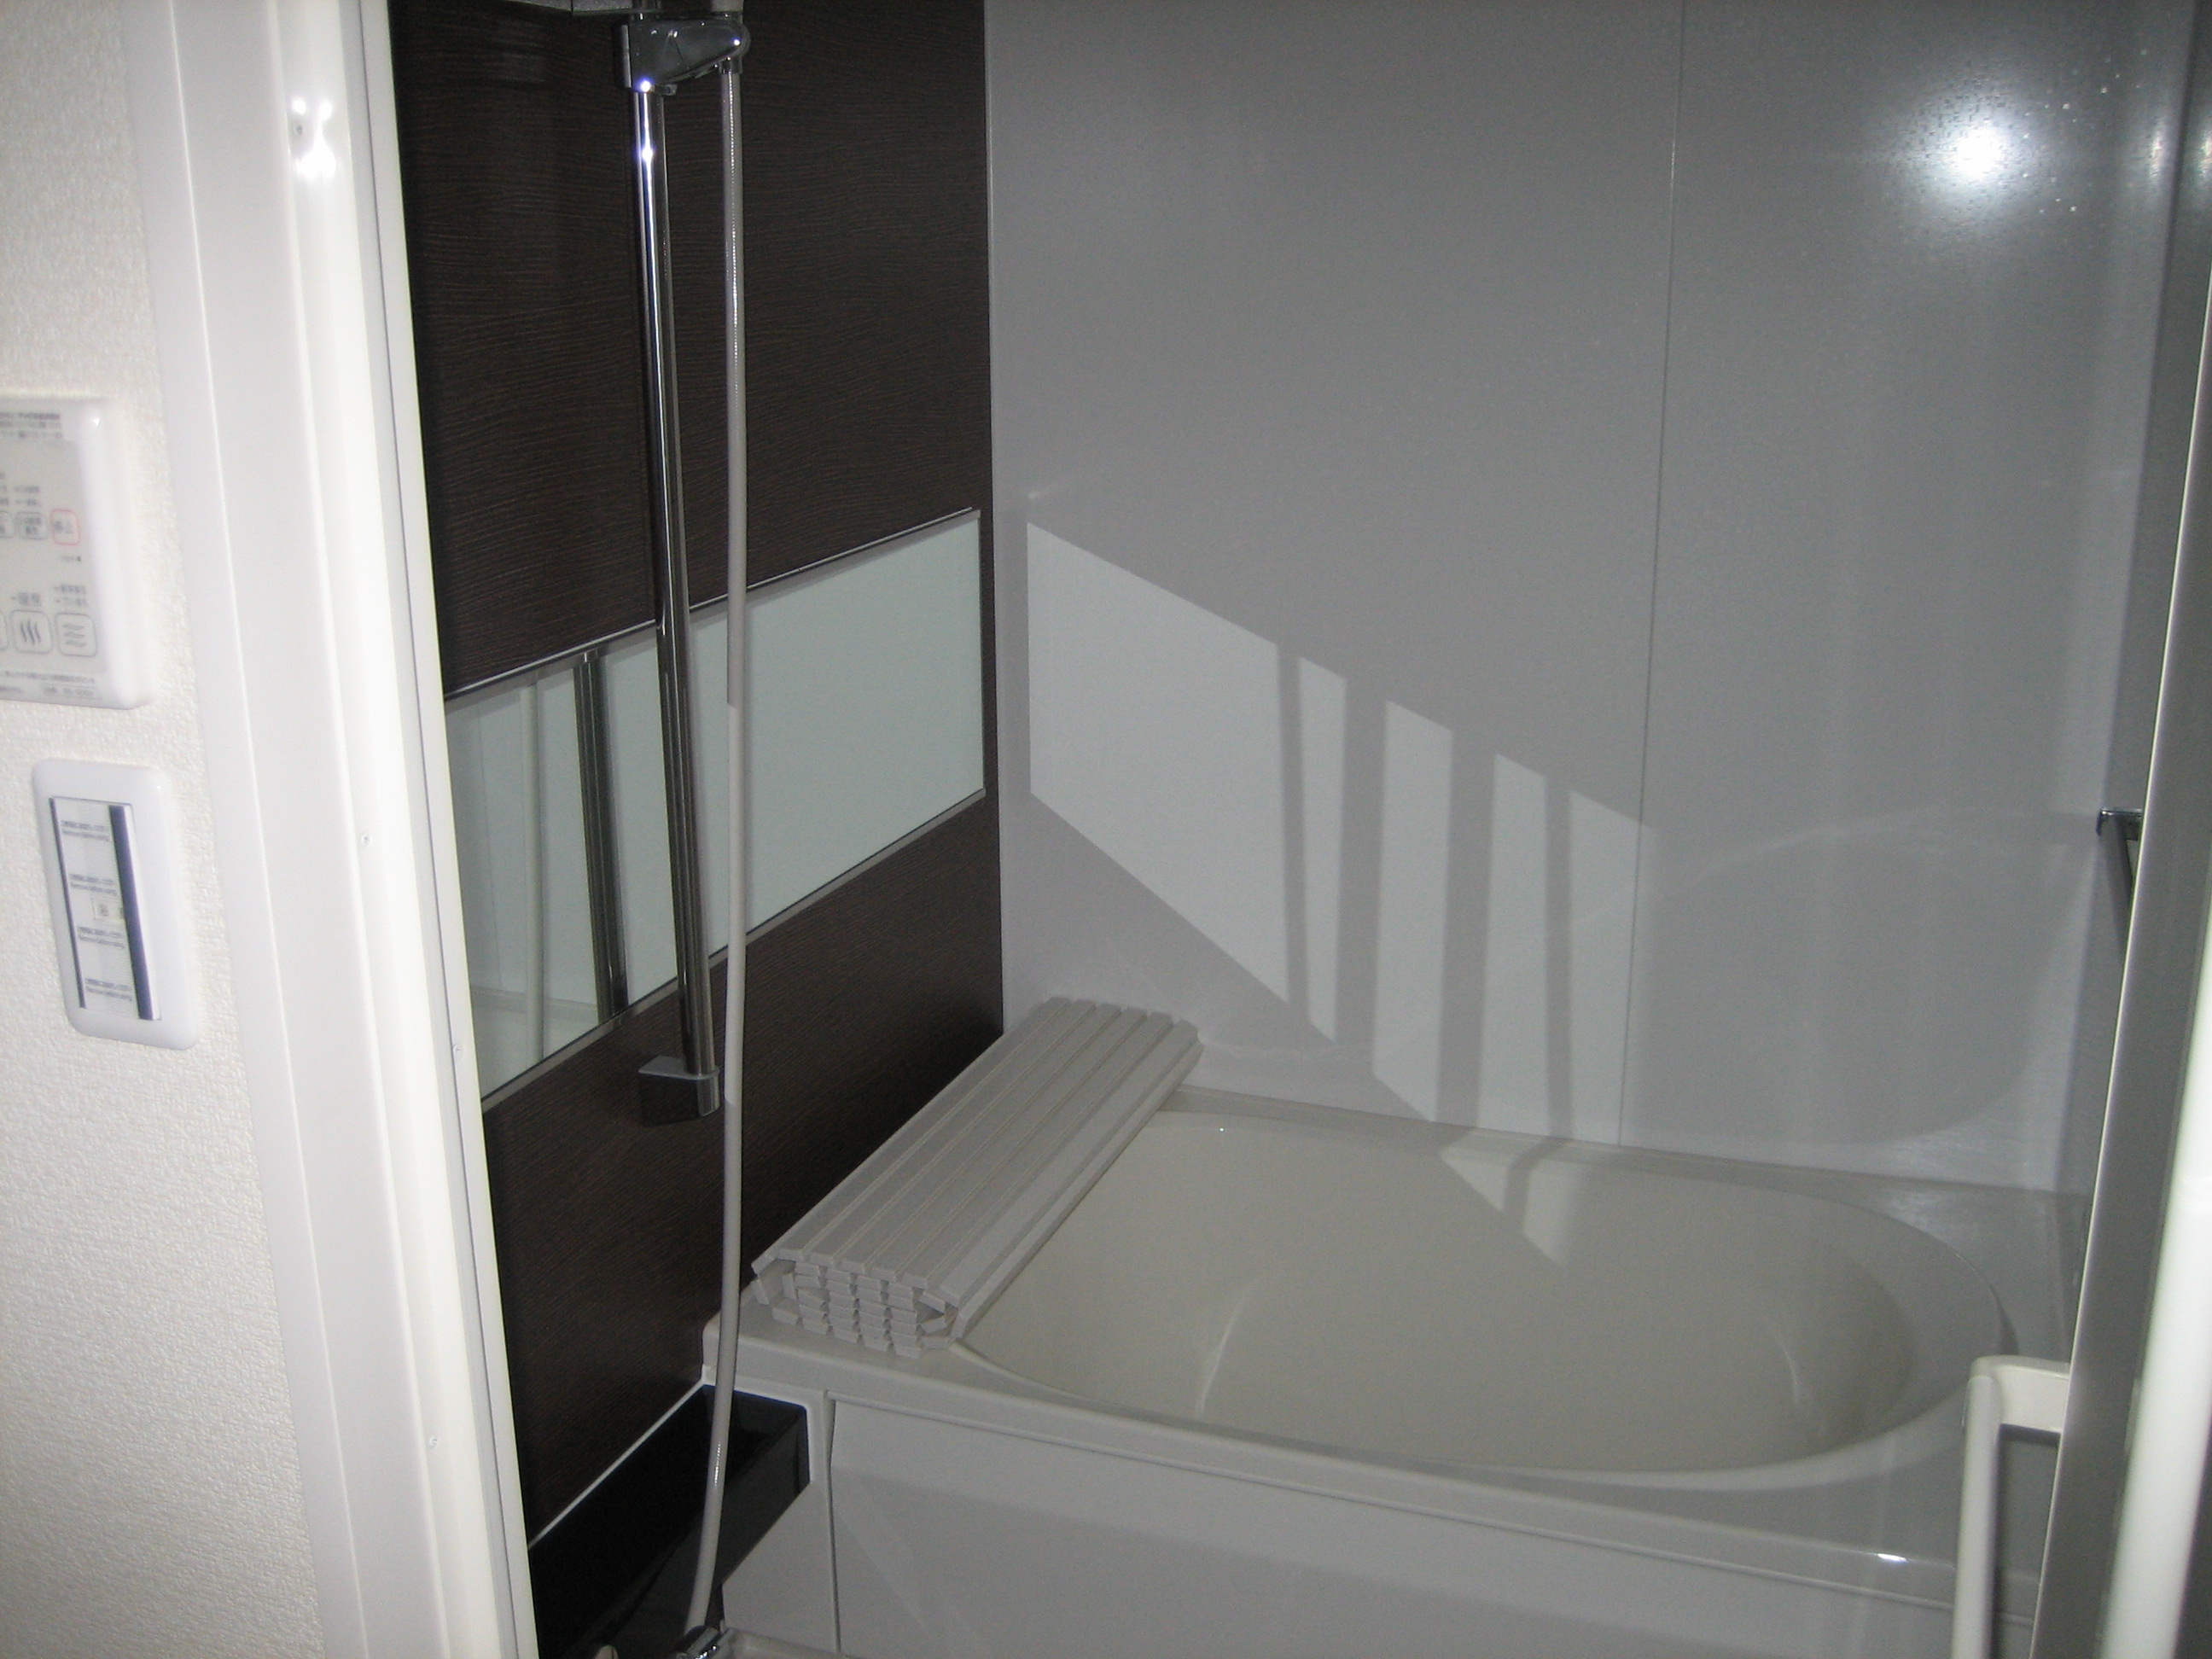 Bath. Hybrid water heater use